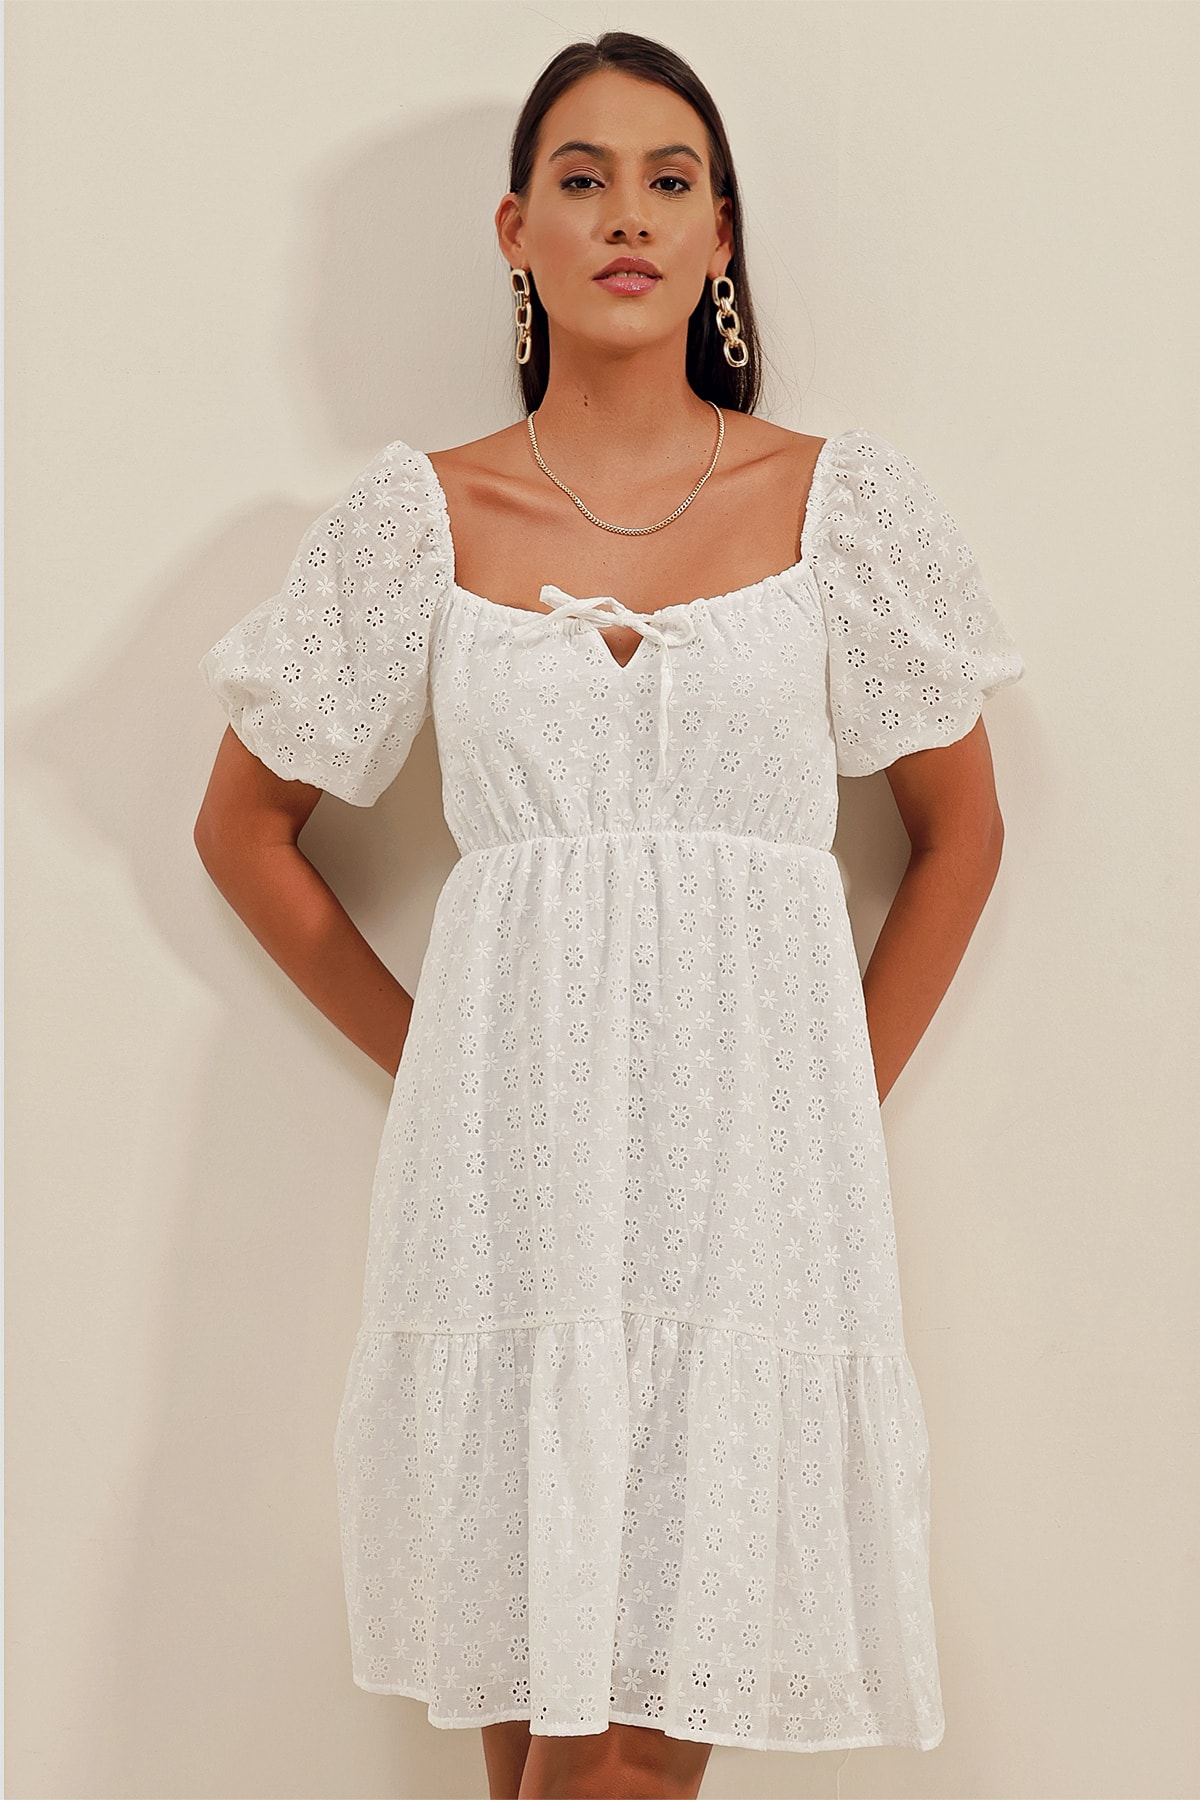 Bigdart 2392 Scalloped Dress - White